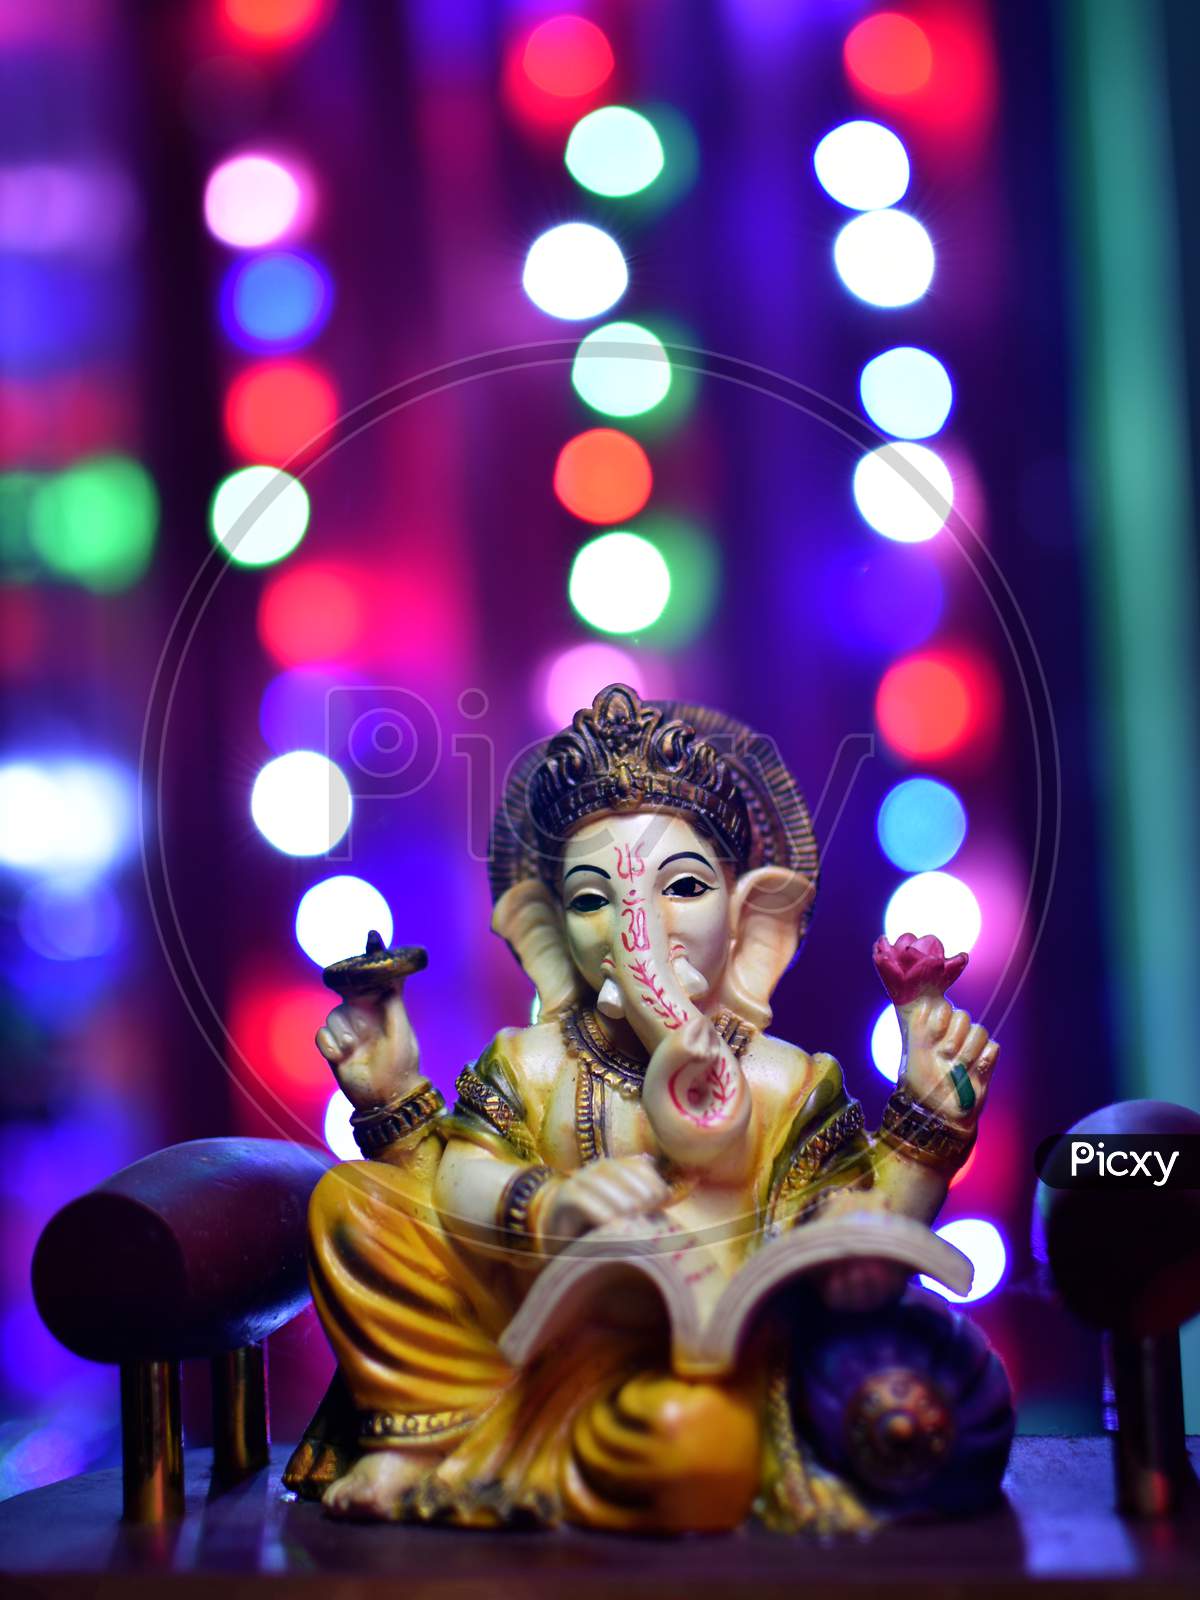 Lord Ganesha Was The Elephant-Headed God In Hinduism